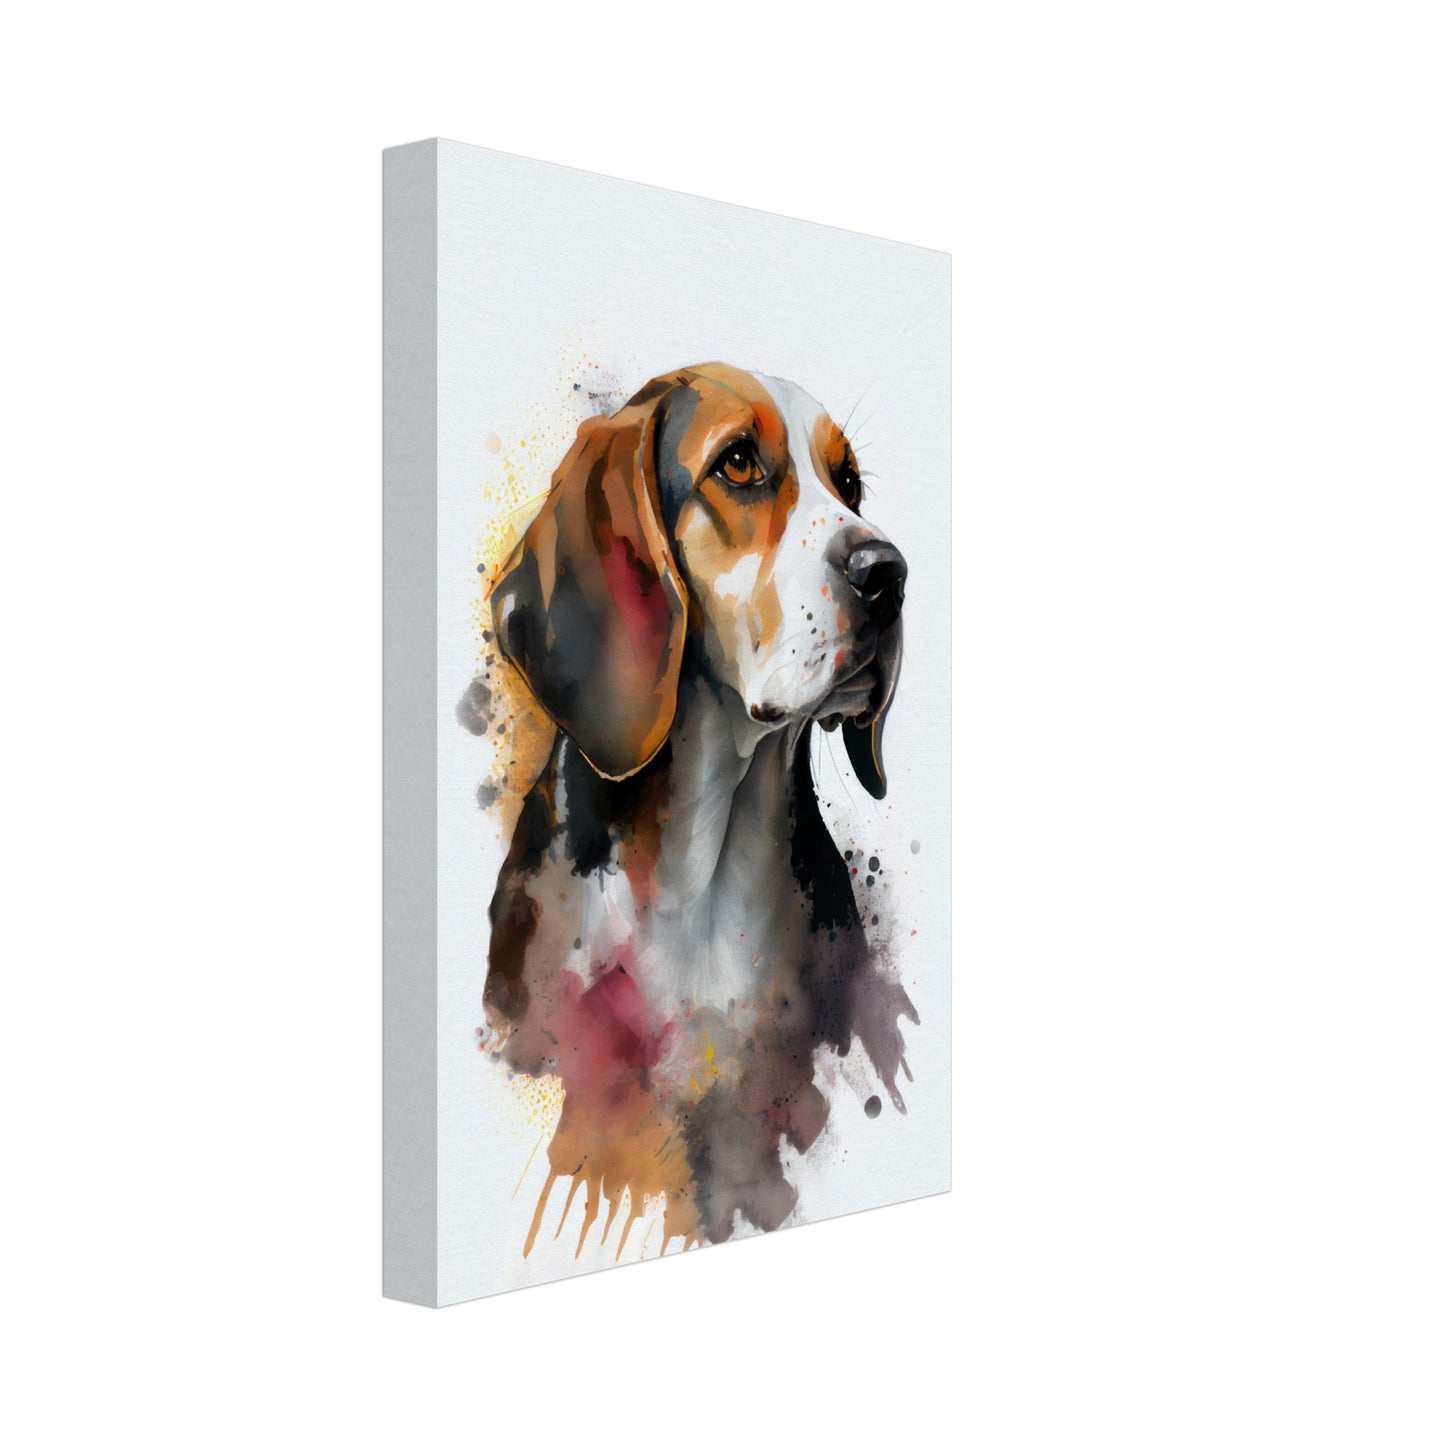 Beagle Bubbles - Hunde Wandbild - Dogs Art Leinwand WaterColors im Hochformat - Hundebilder Hundeportrait Tiere Tierbilder Kunstdruck Aquarell